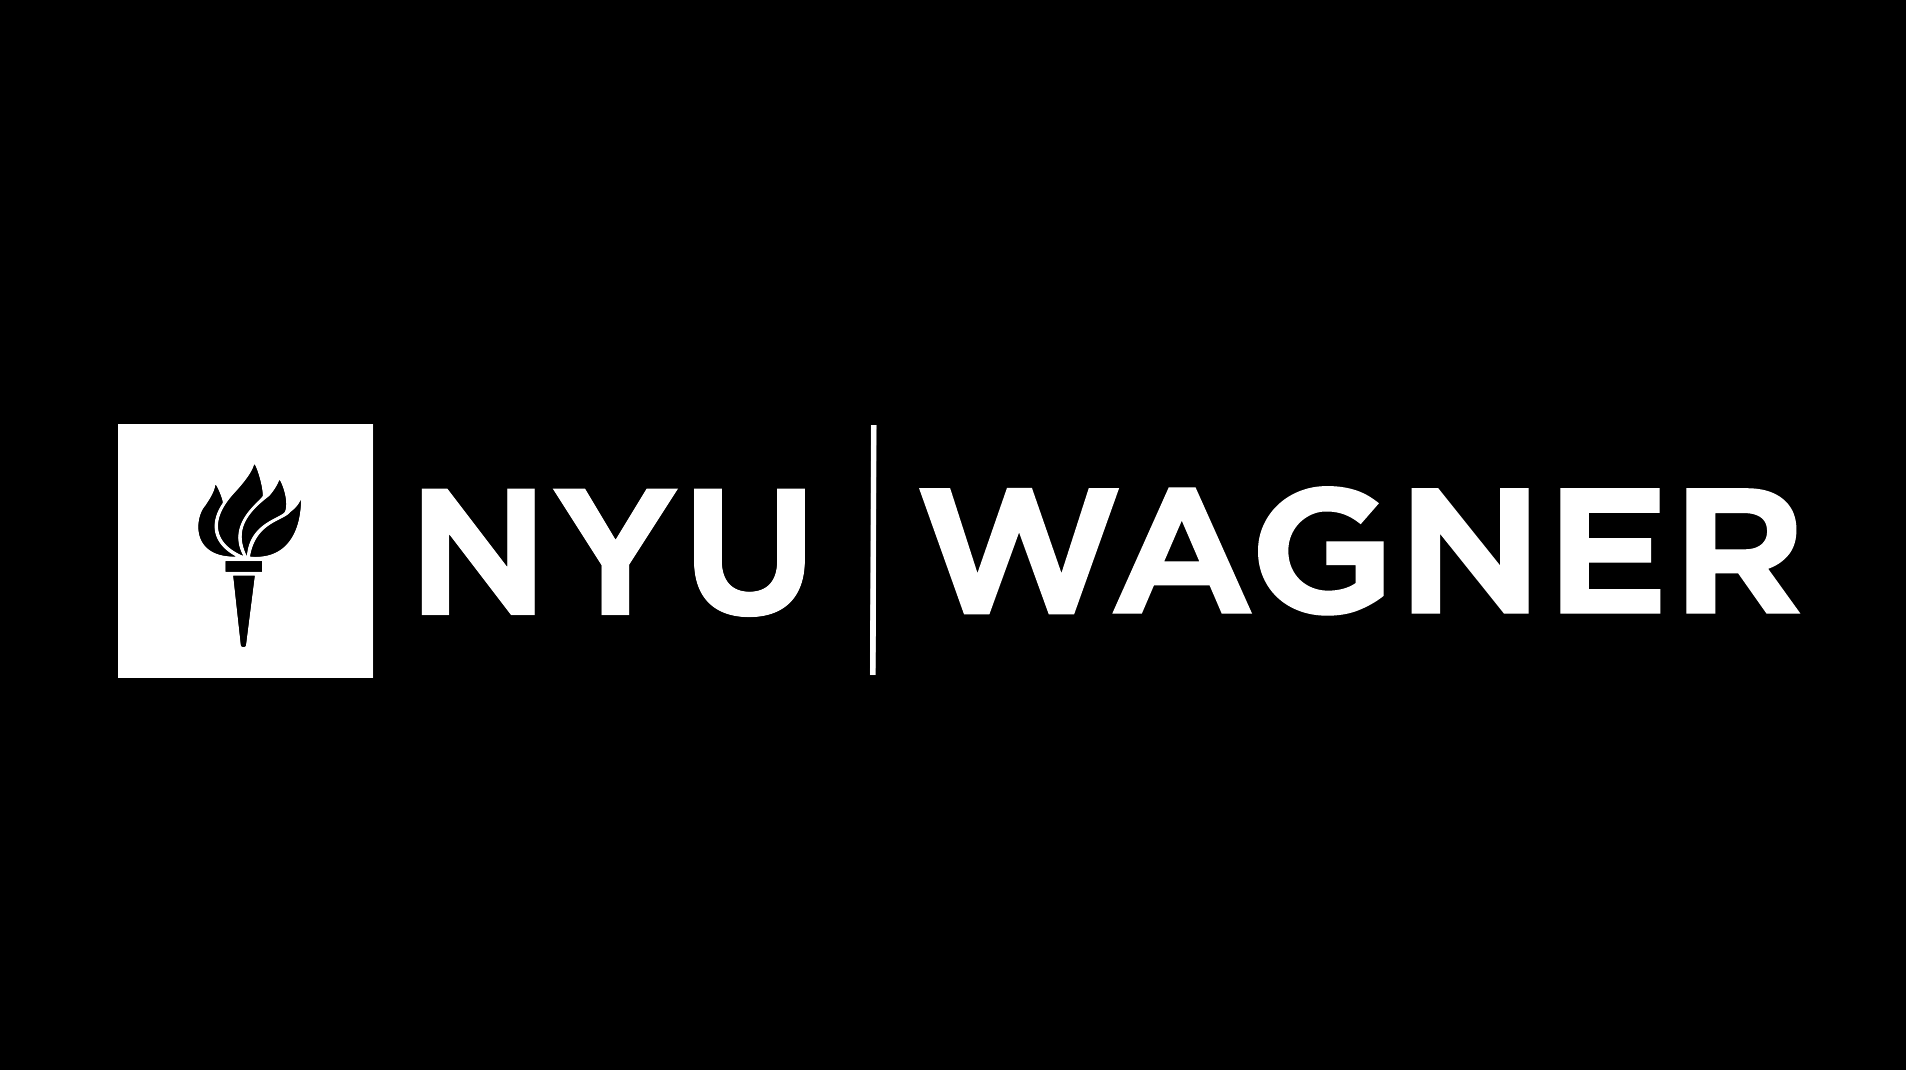 Henry Hart Rice Urban Studies Fellowship 2021 to Study at NYU Wagner